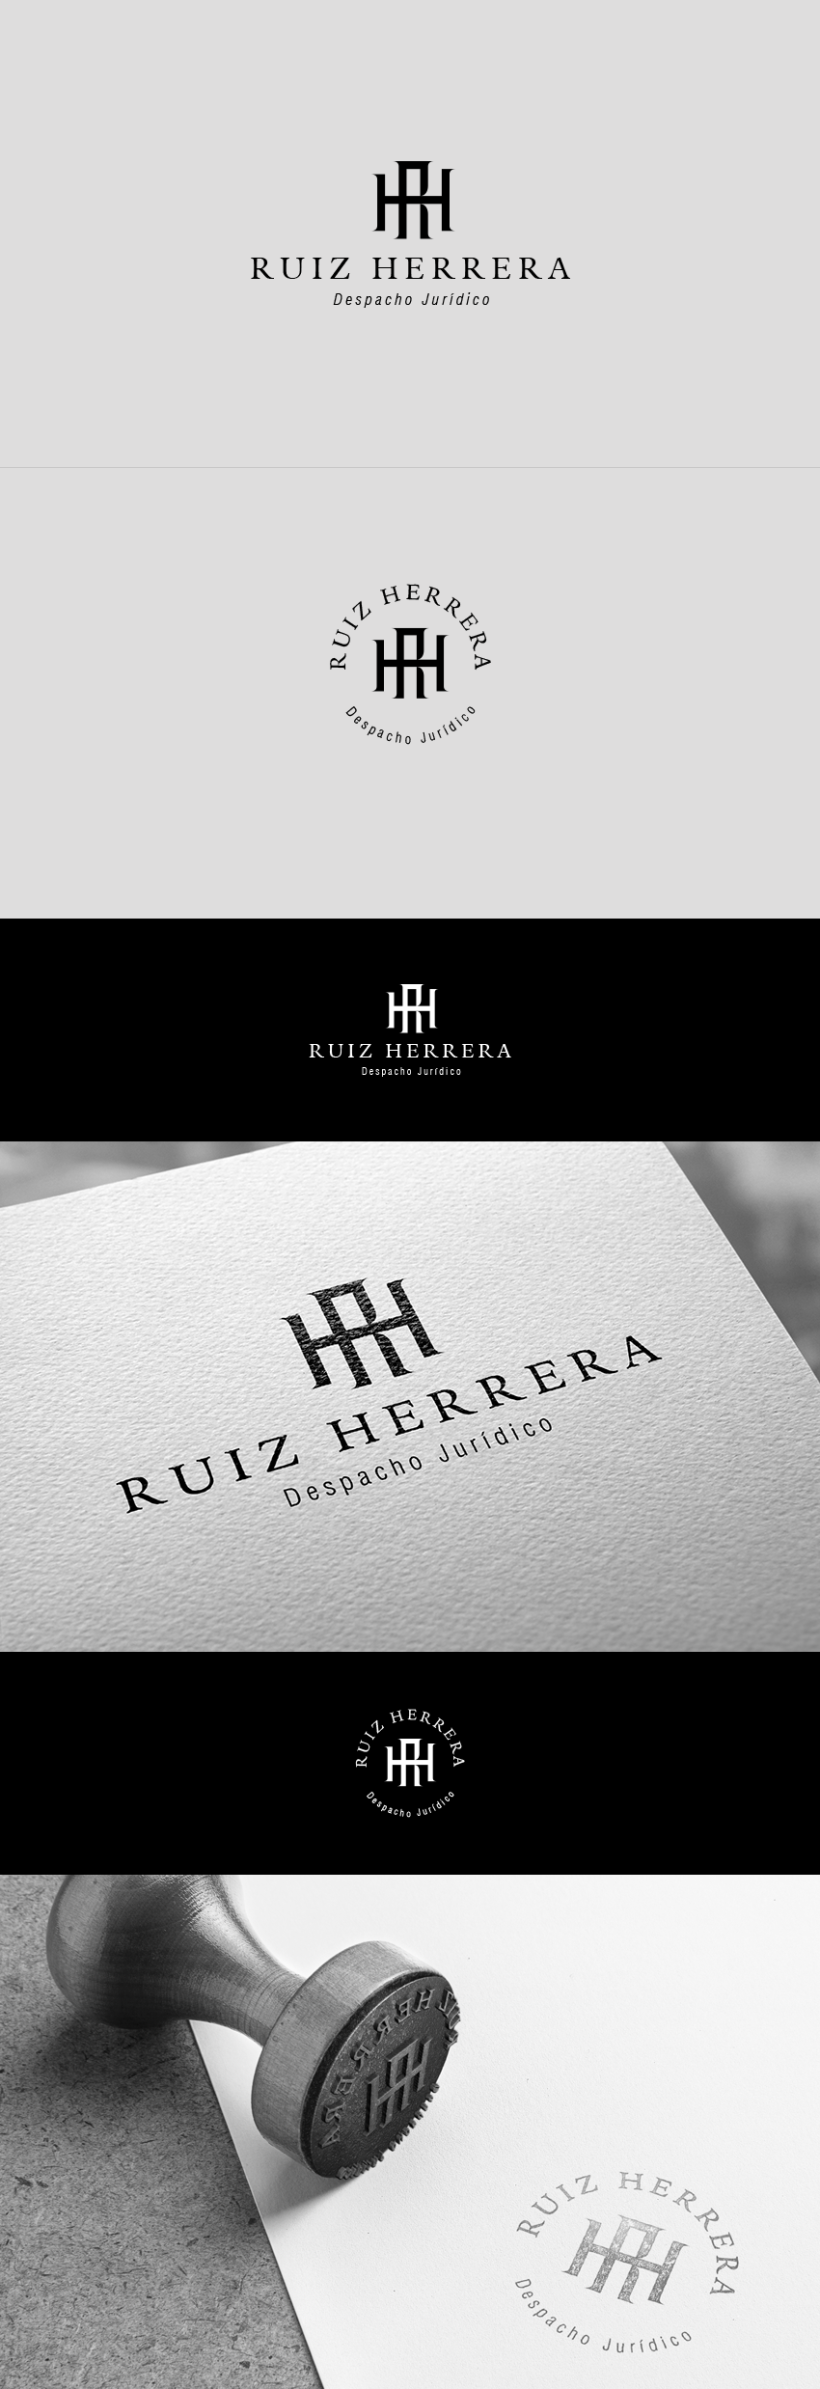 Logo Ruiz Herrera V.1 0